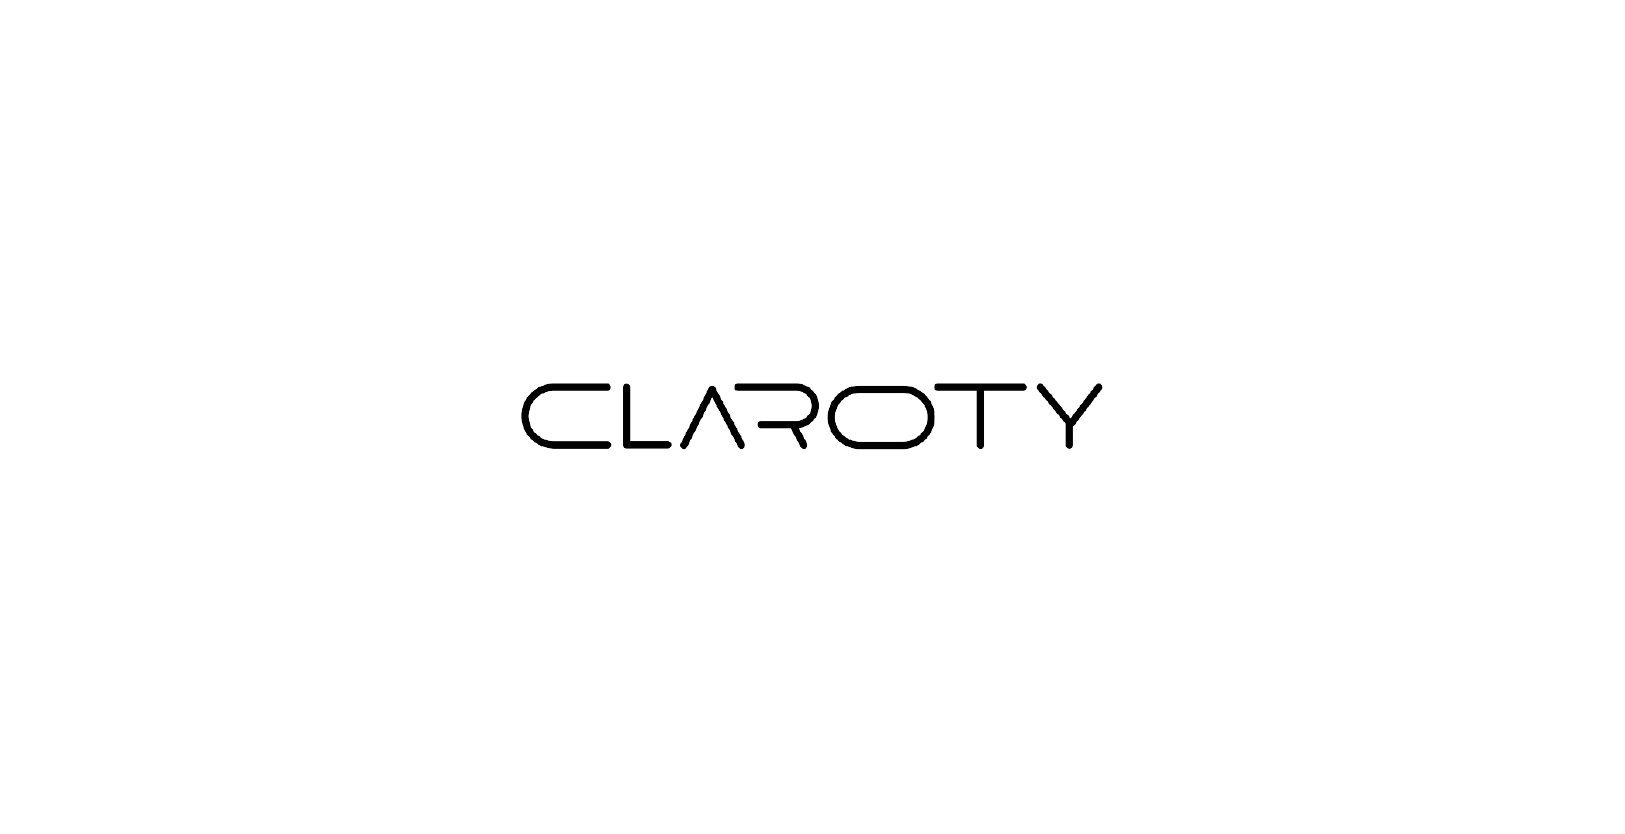 Vision Fund investment portfolio company Claroty's logo